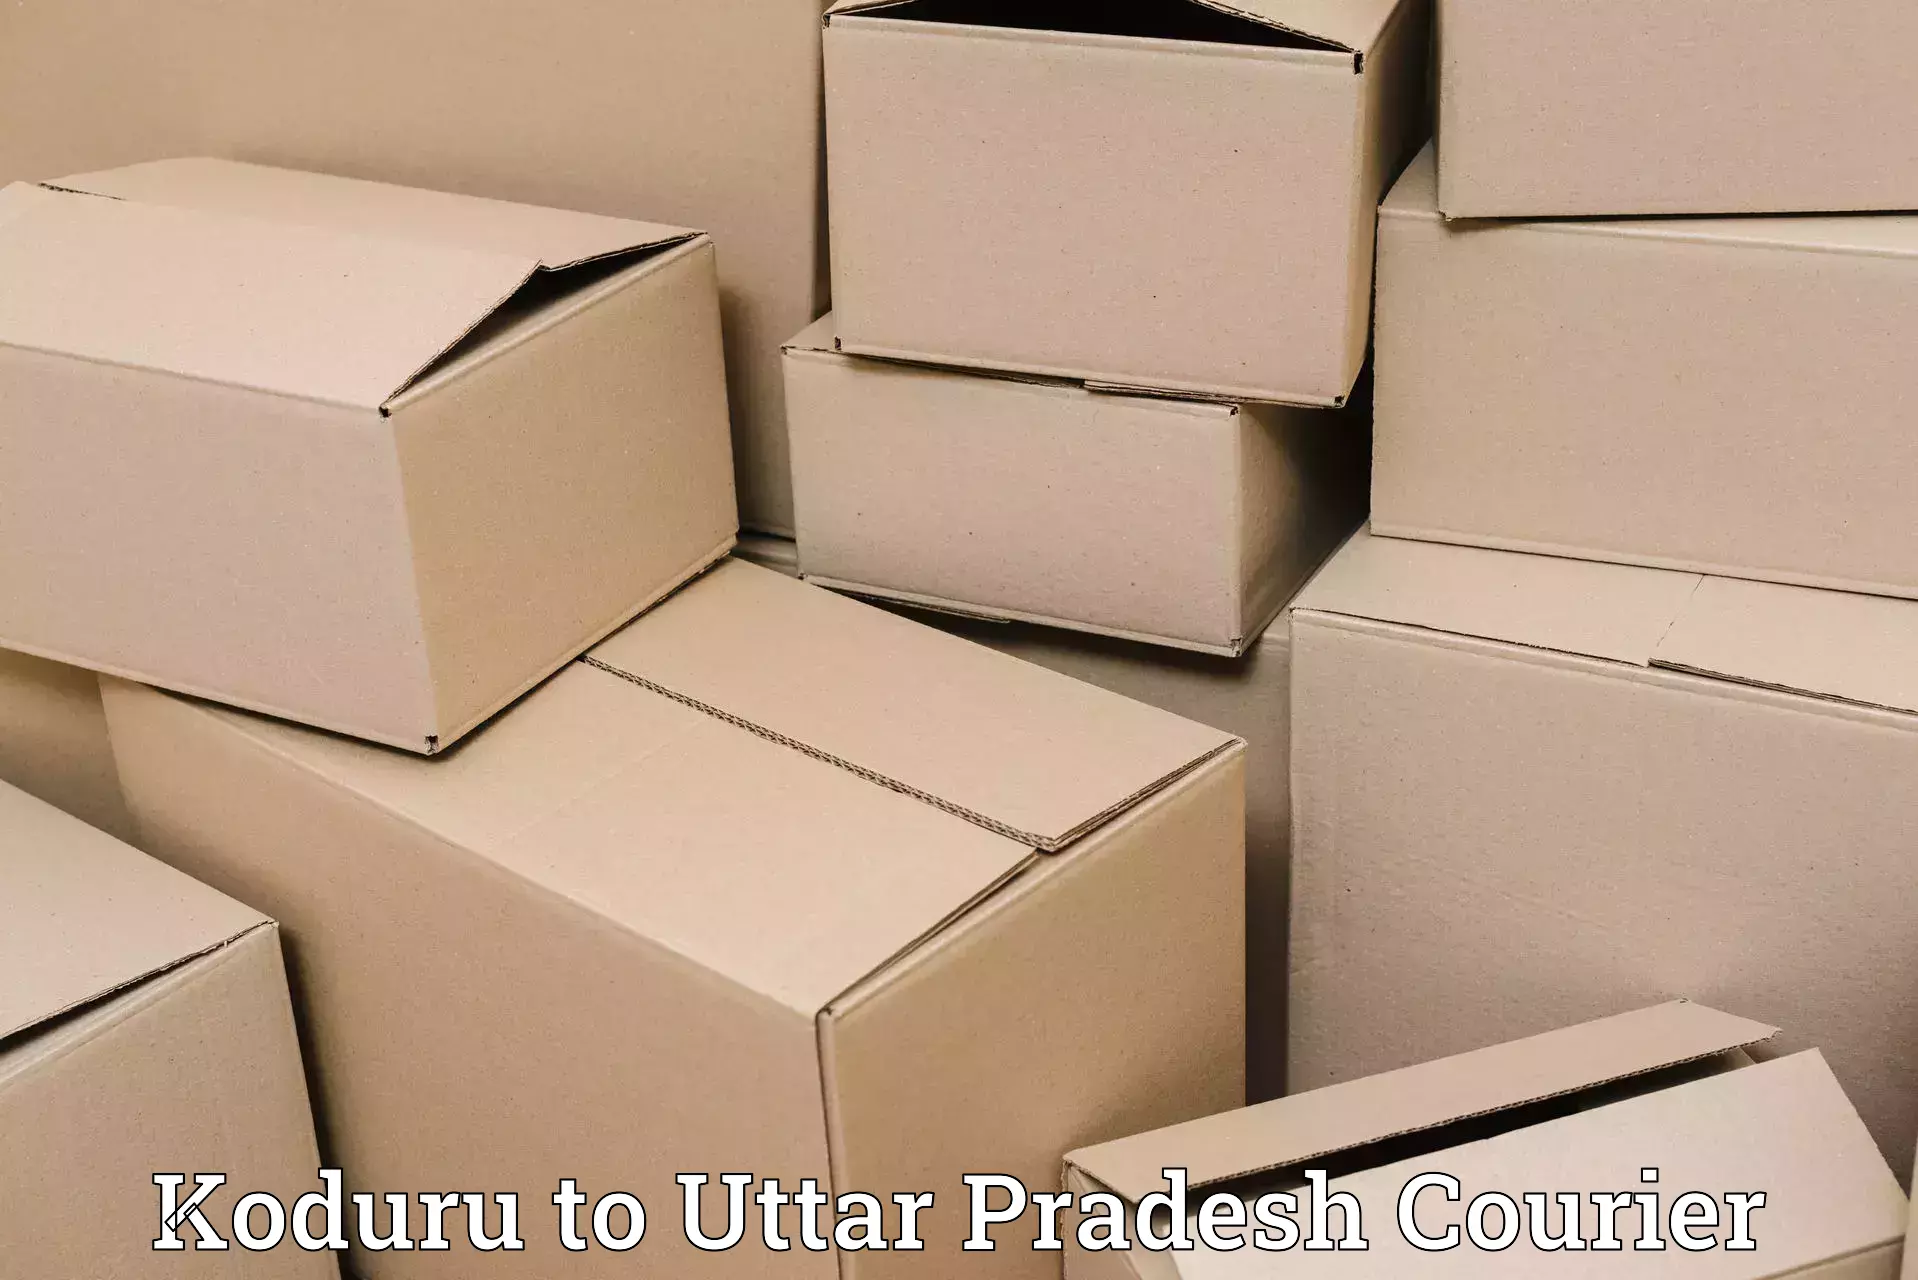 Nationwide parcel services Koduru to Pahasu